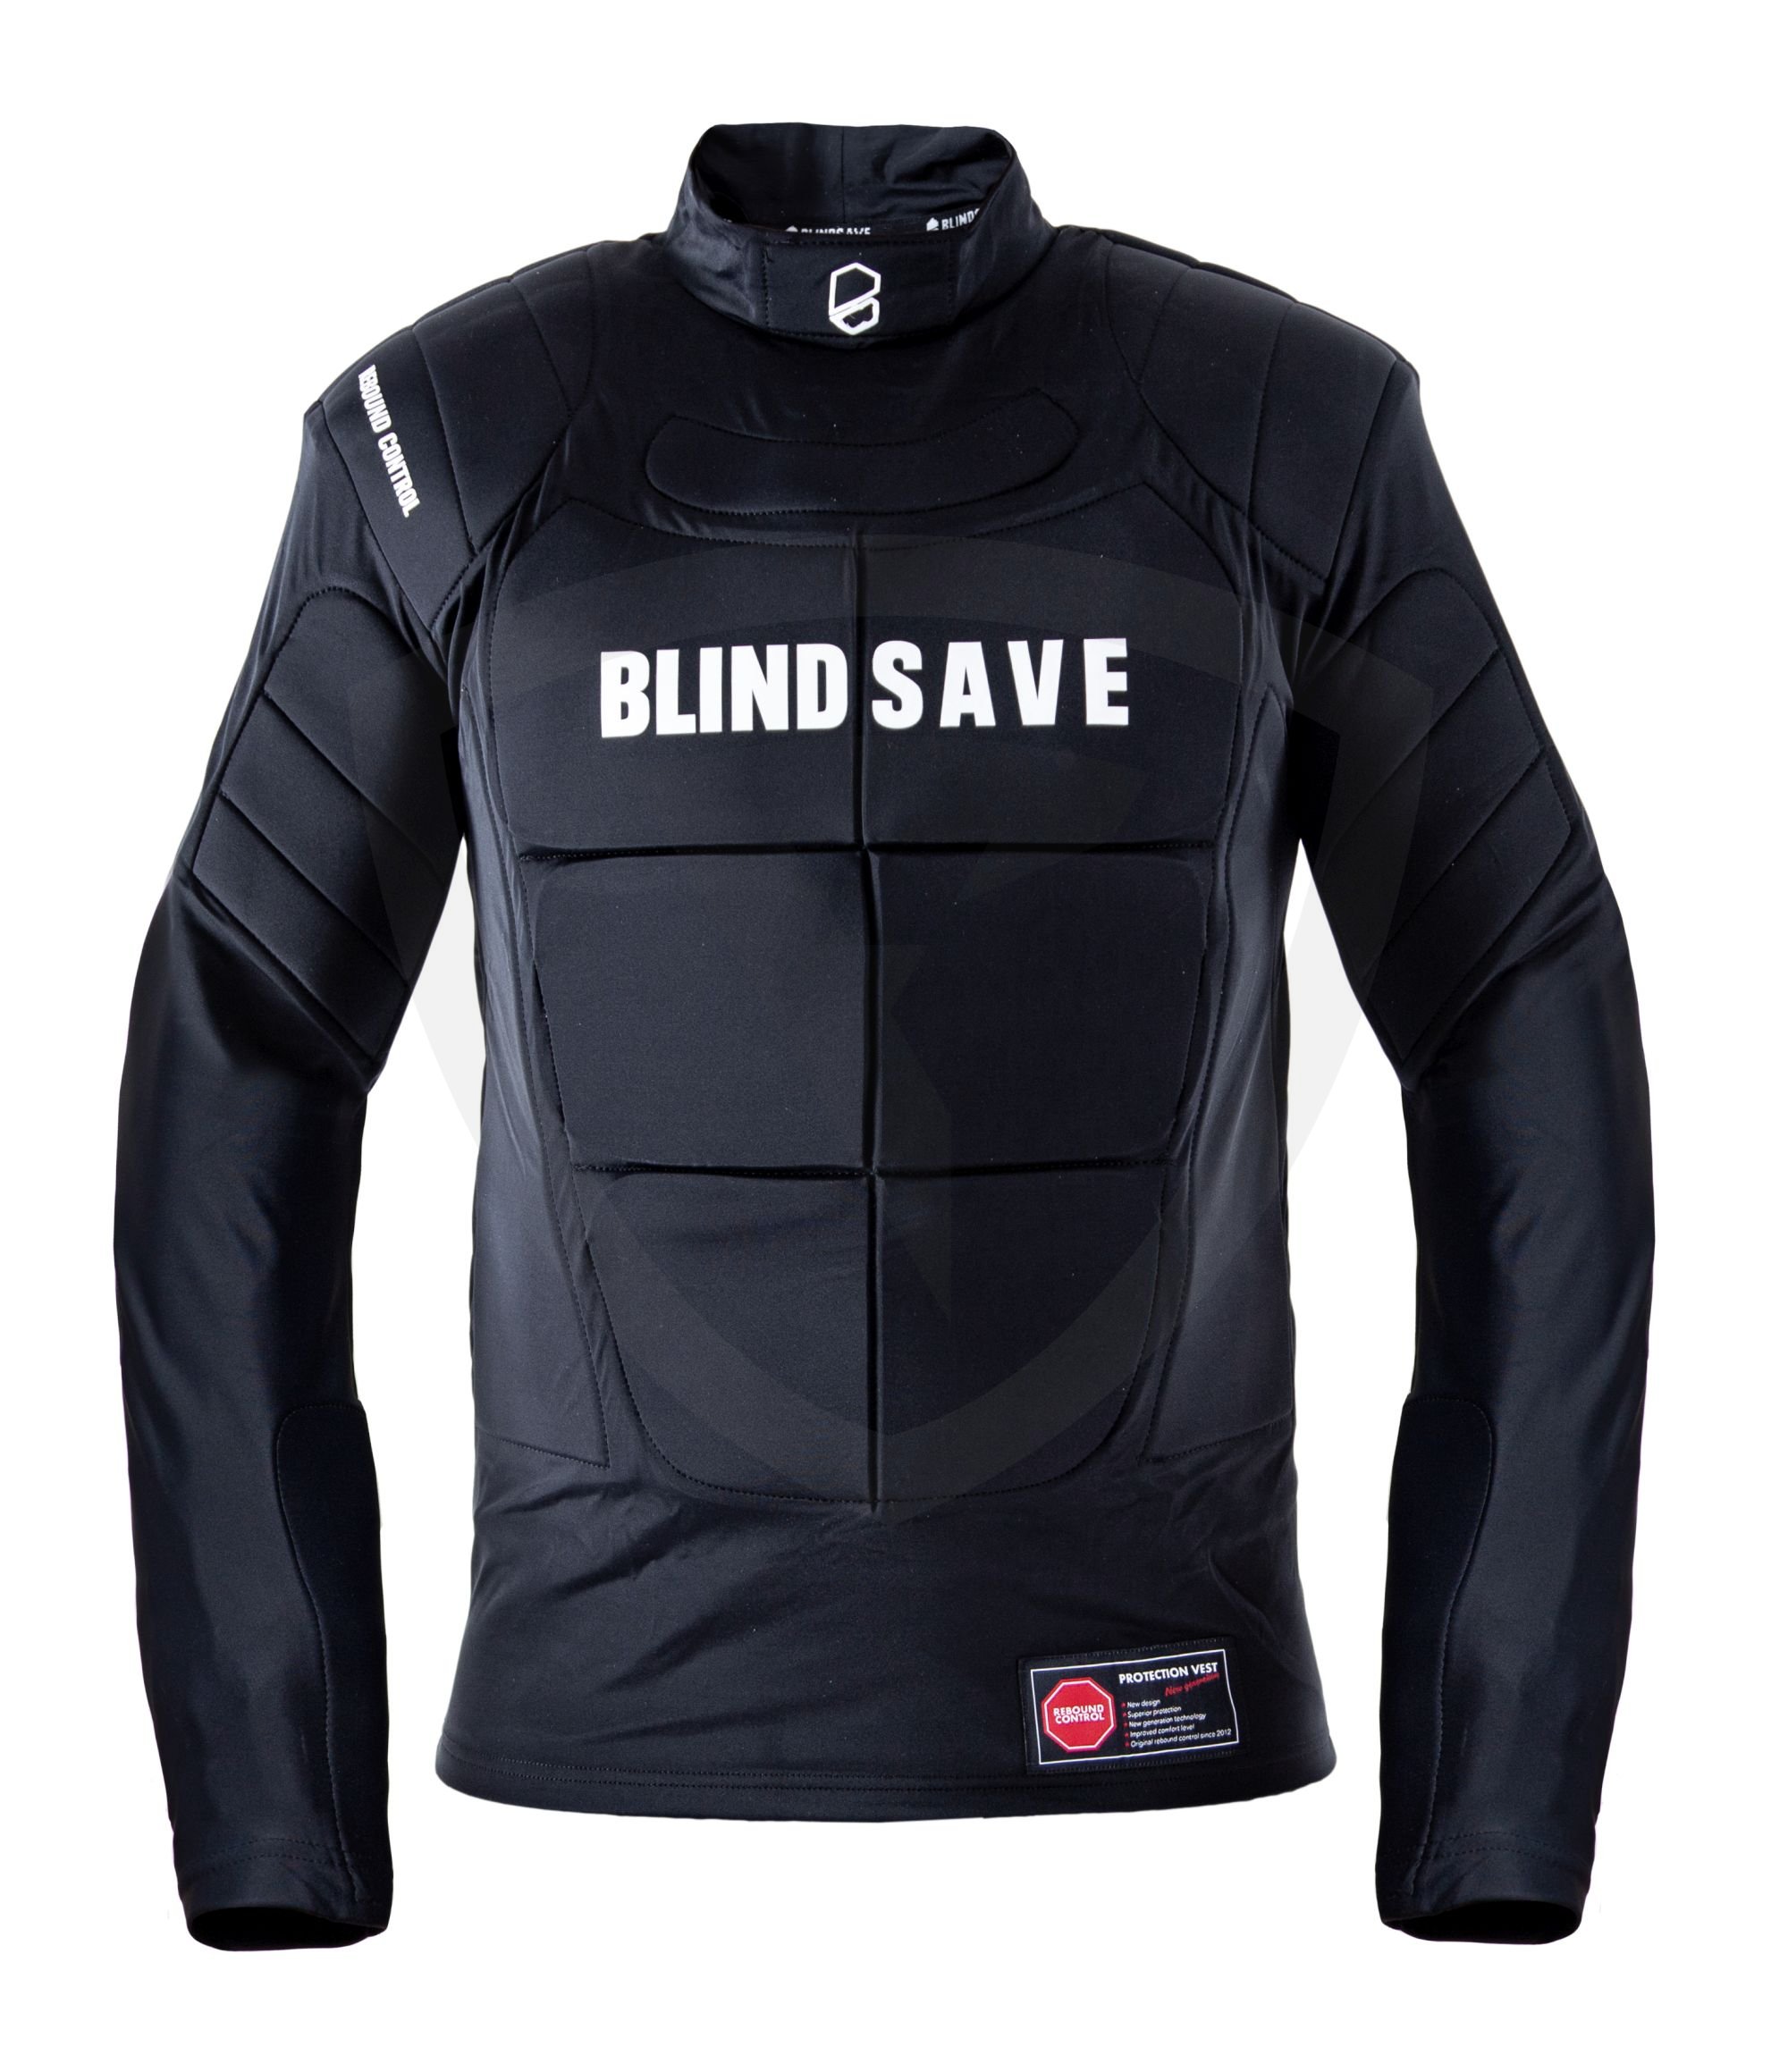 Blindsave NEW Protection vest LS Rebound Control XL